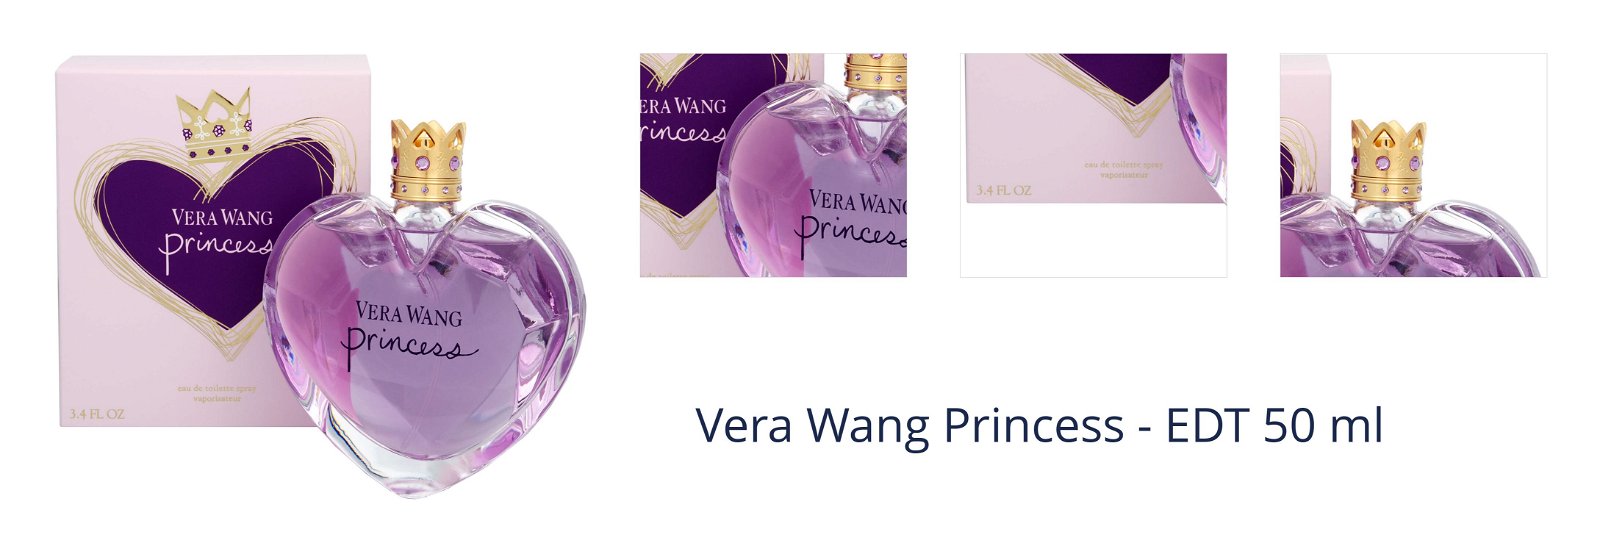 Vera Wang Princess - EDT 50 ml 7